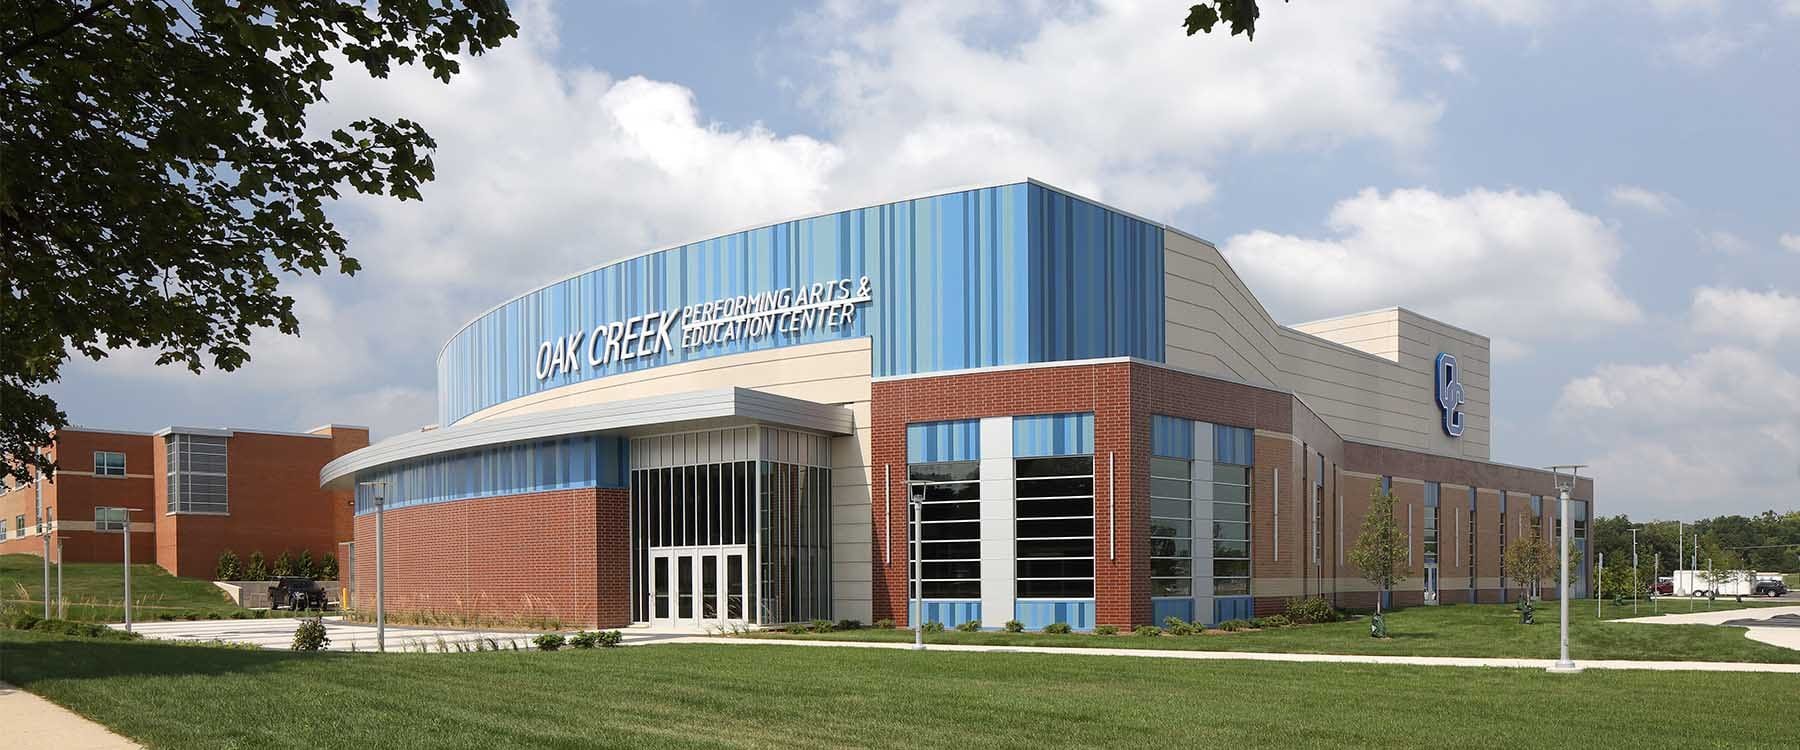 Oak Creek School District Performing Arts Center